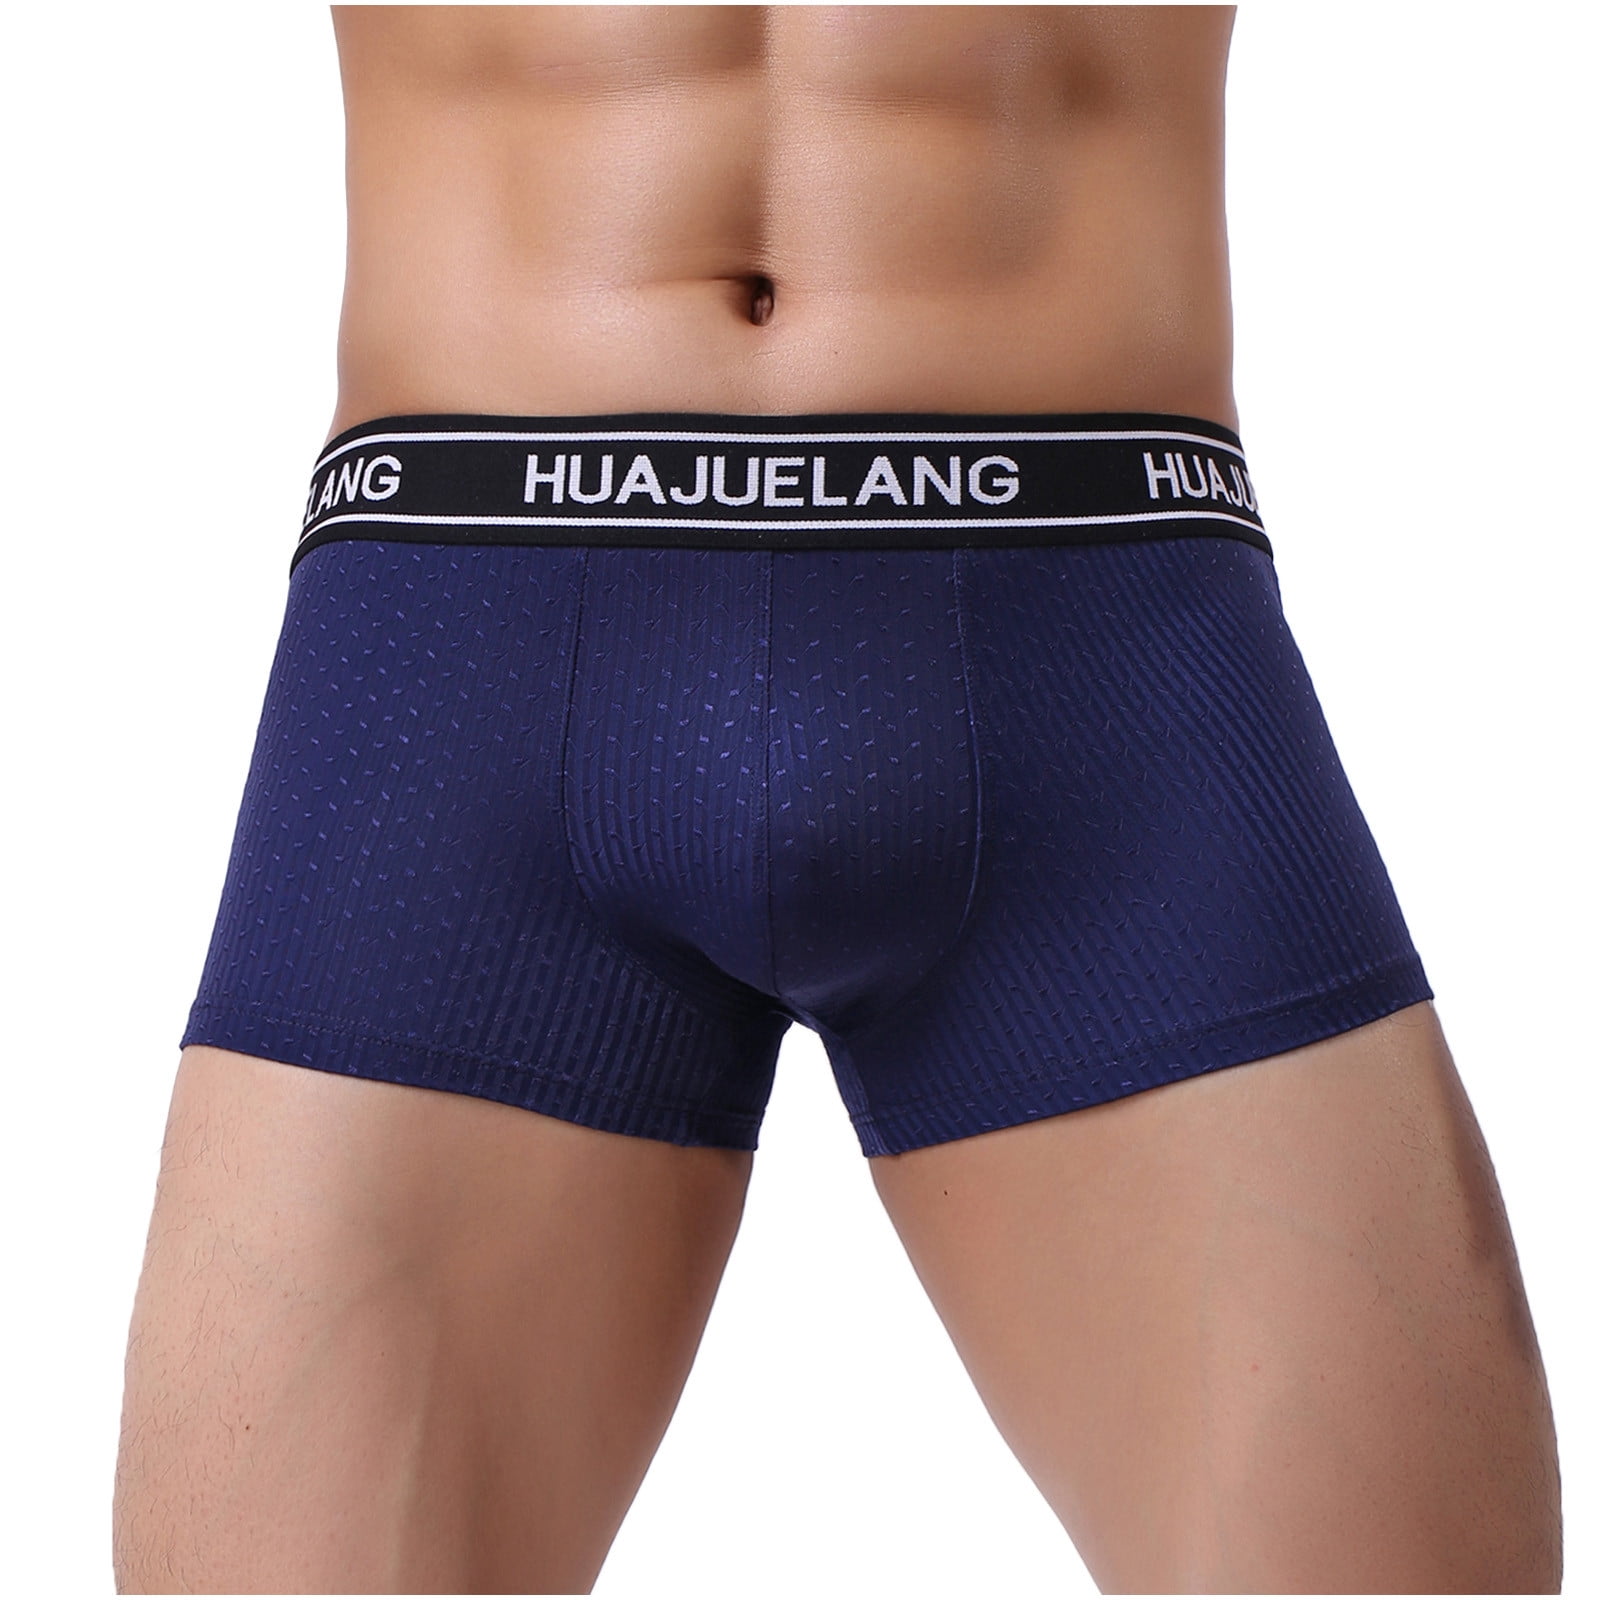 Lopecy-Sta HUAJUELANG Men's Soft Briefs Underpants Knickers Shorts  Underwear Boxers for Men Navy Deals Clearance Mens Briefs - XXL